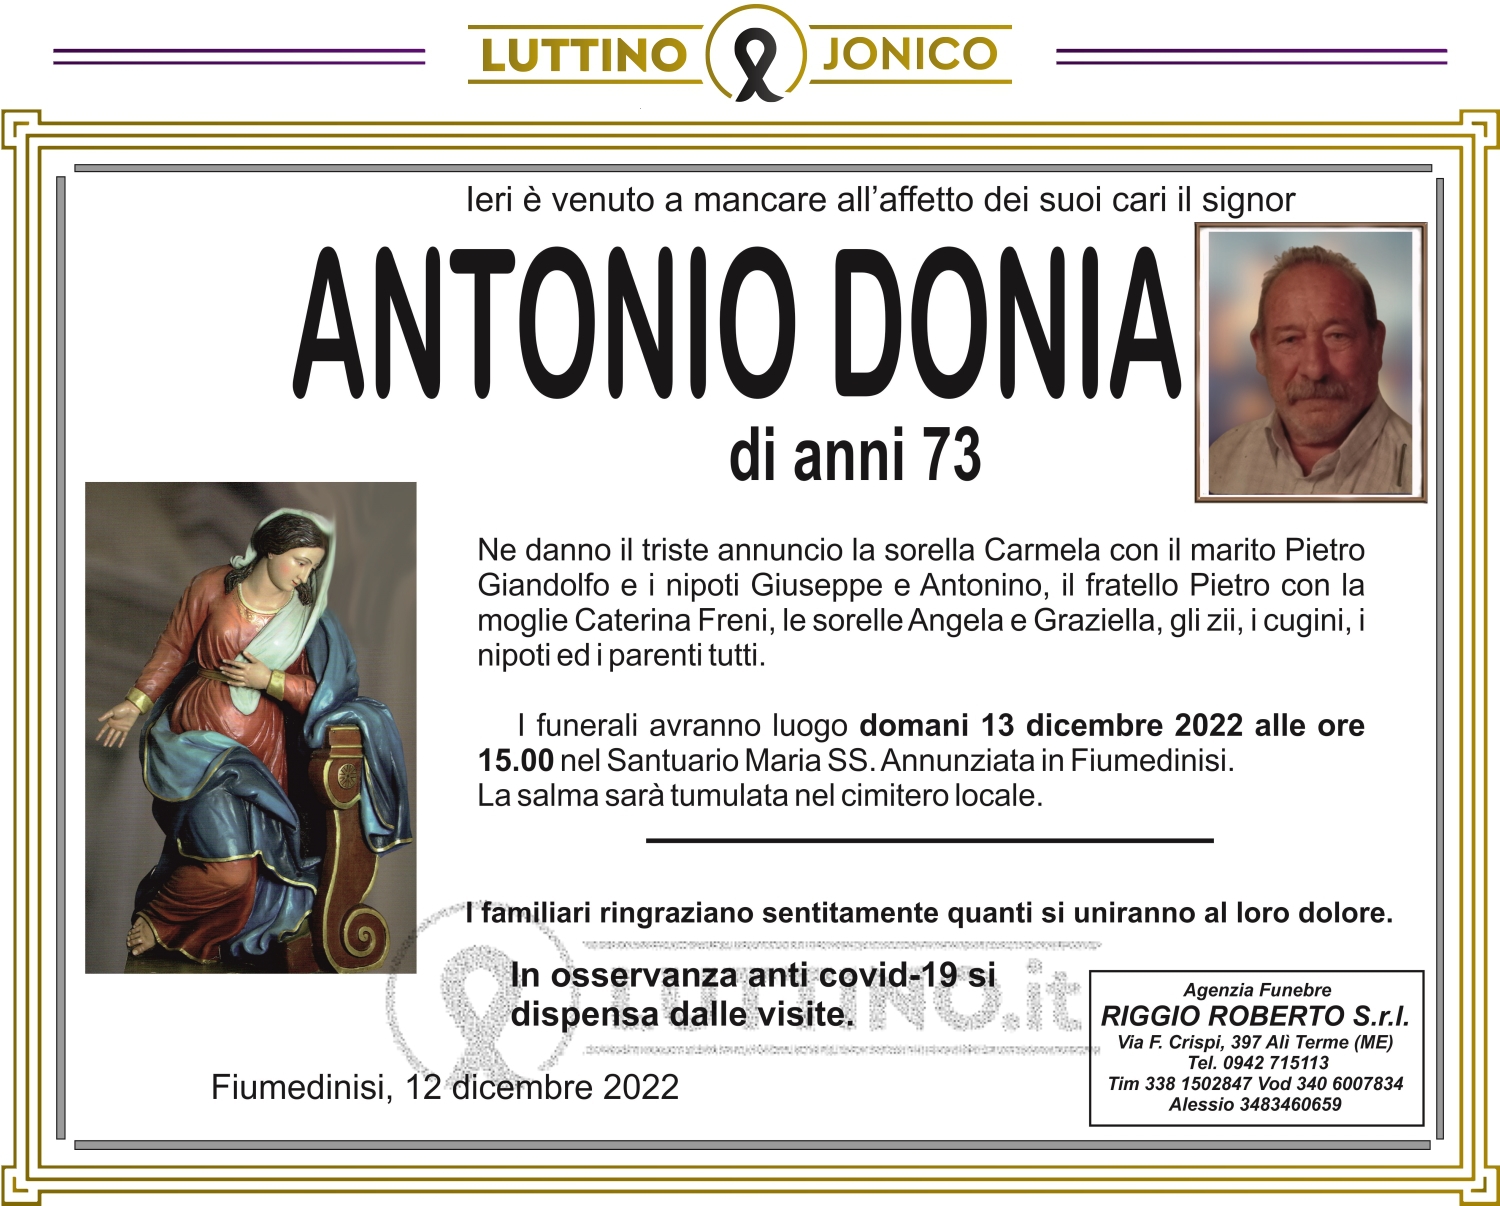 Antonio Donia